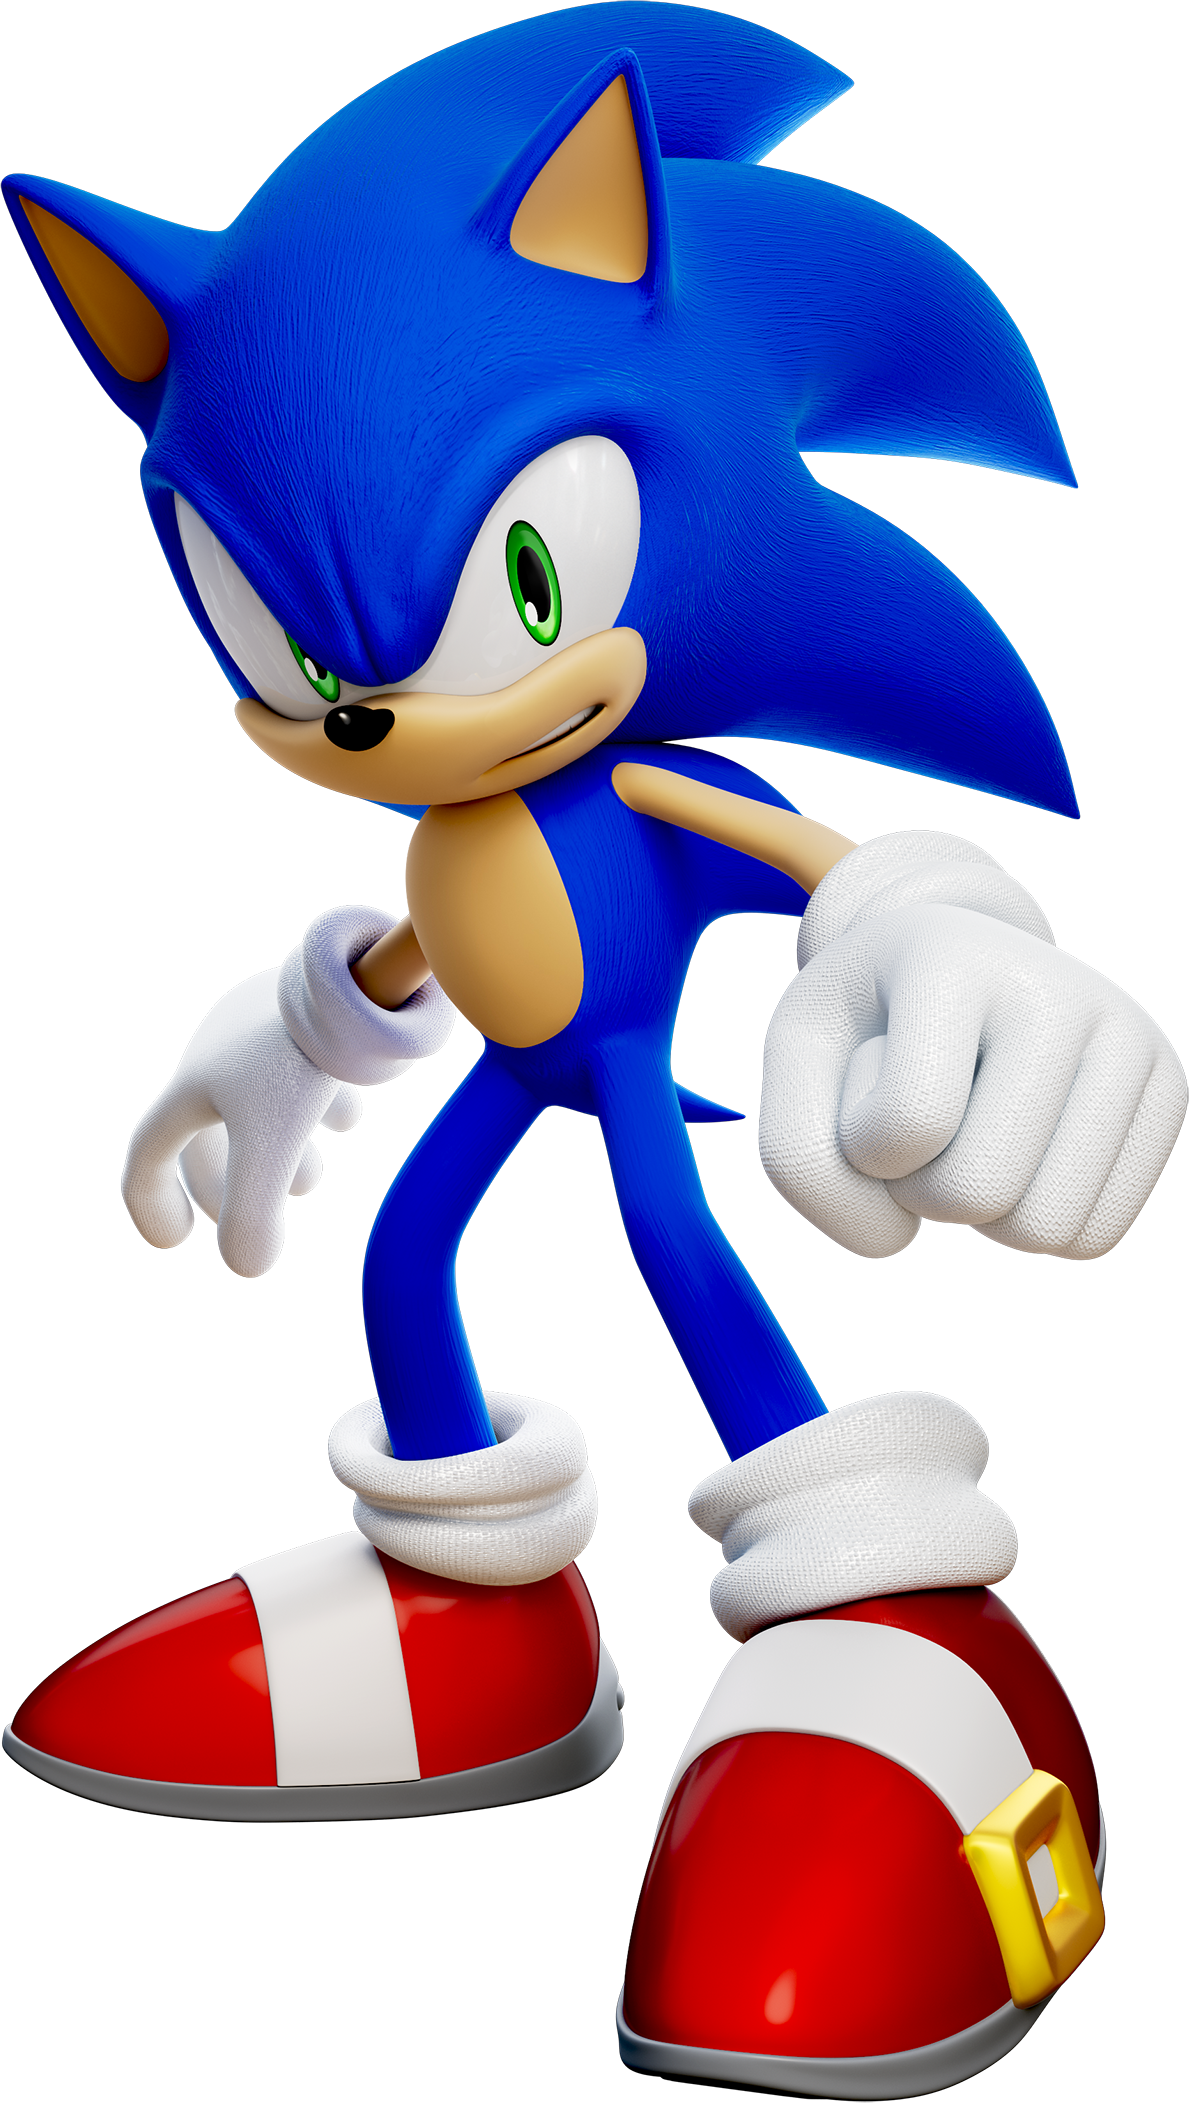 Sonic the Hedgehog Sonic News Network Fandom pic